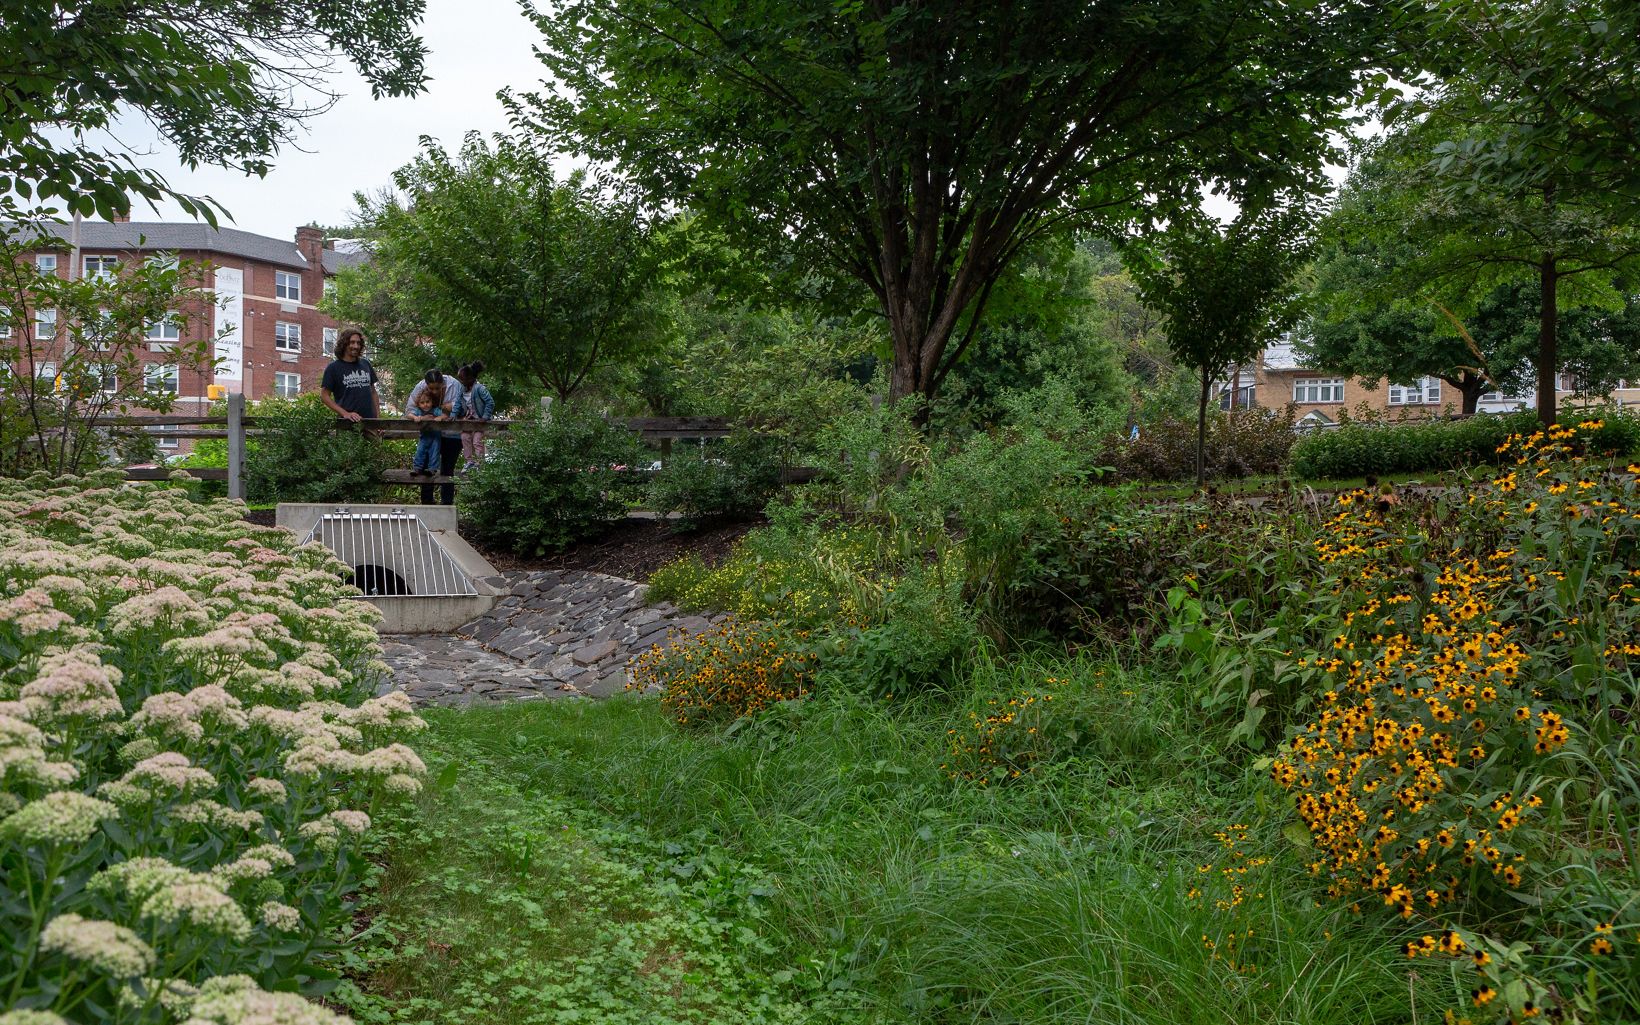 Stormwater retention garden Kemble Park in Philadelphia added a culvert and plants to help retain stormwater. © Steve Weinik